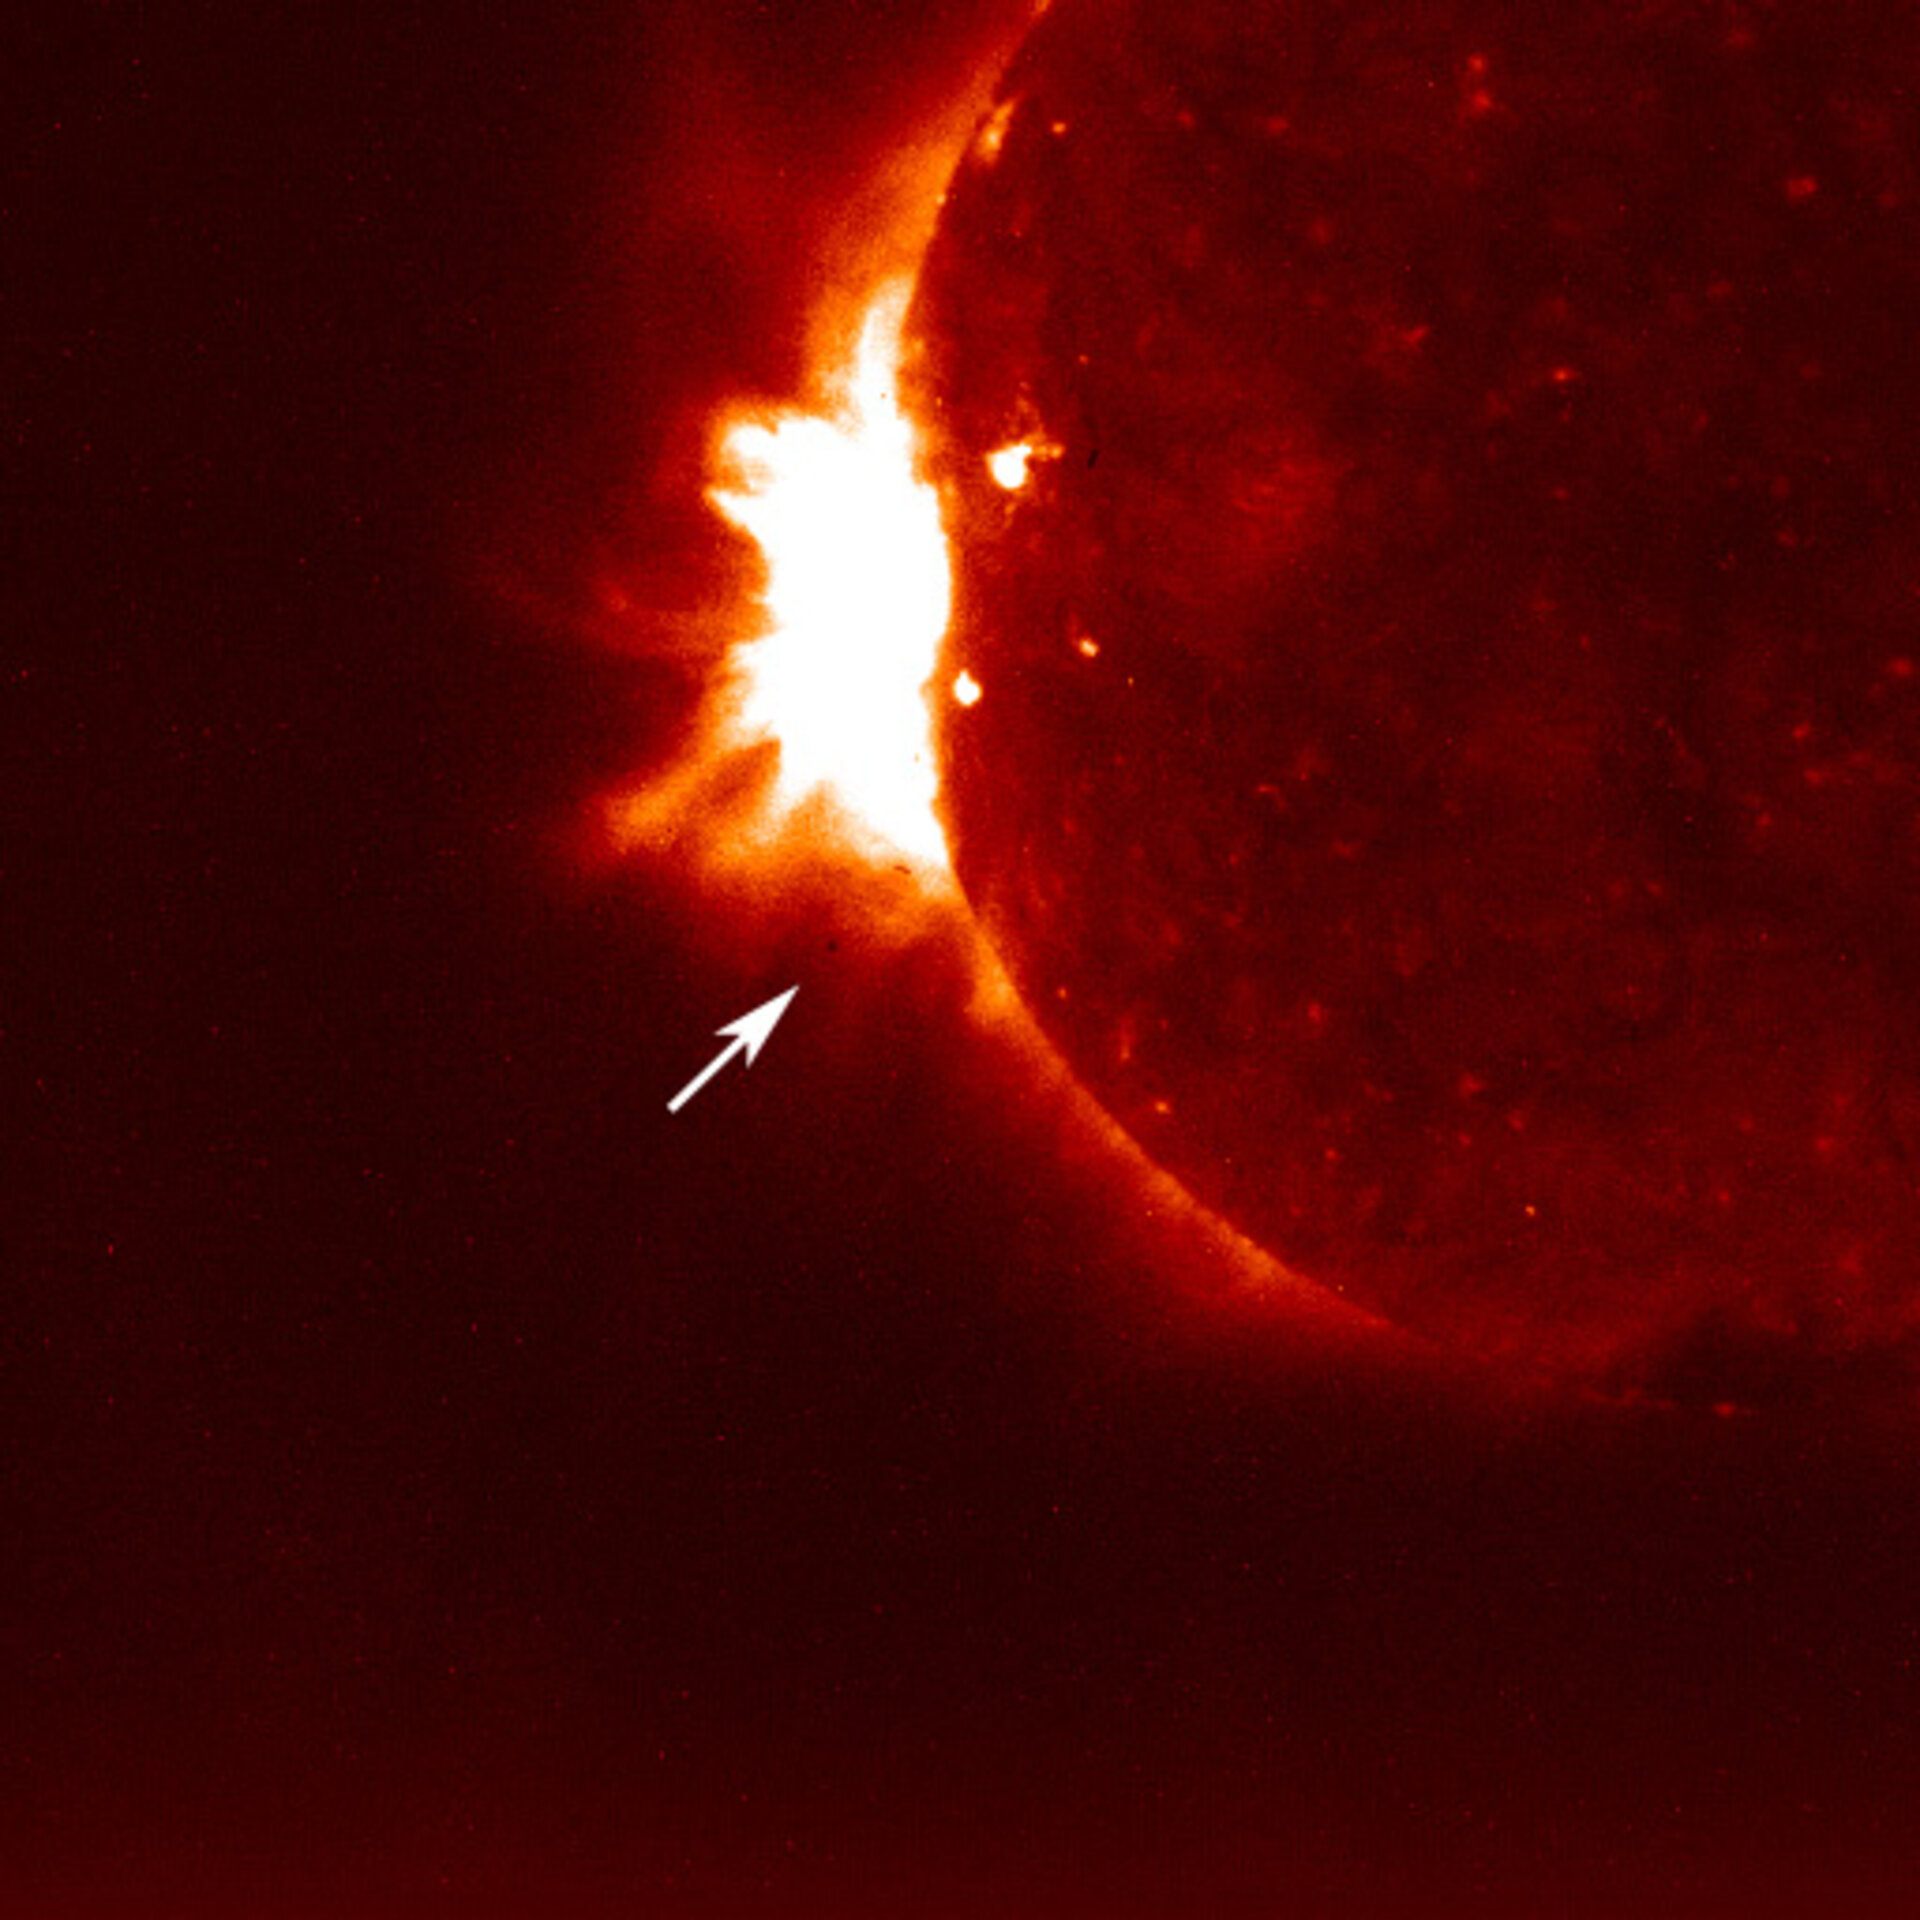 2006 Mercury transit imaged in X-rays by Hinode (Solar-B)